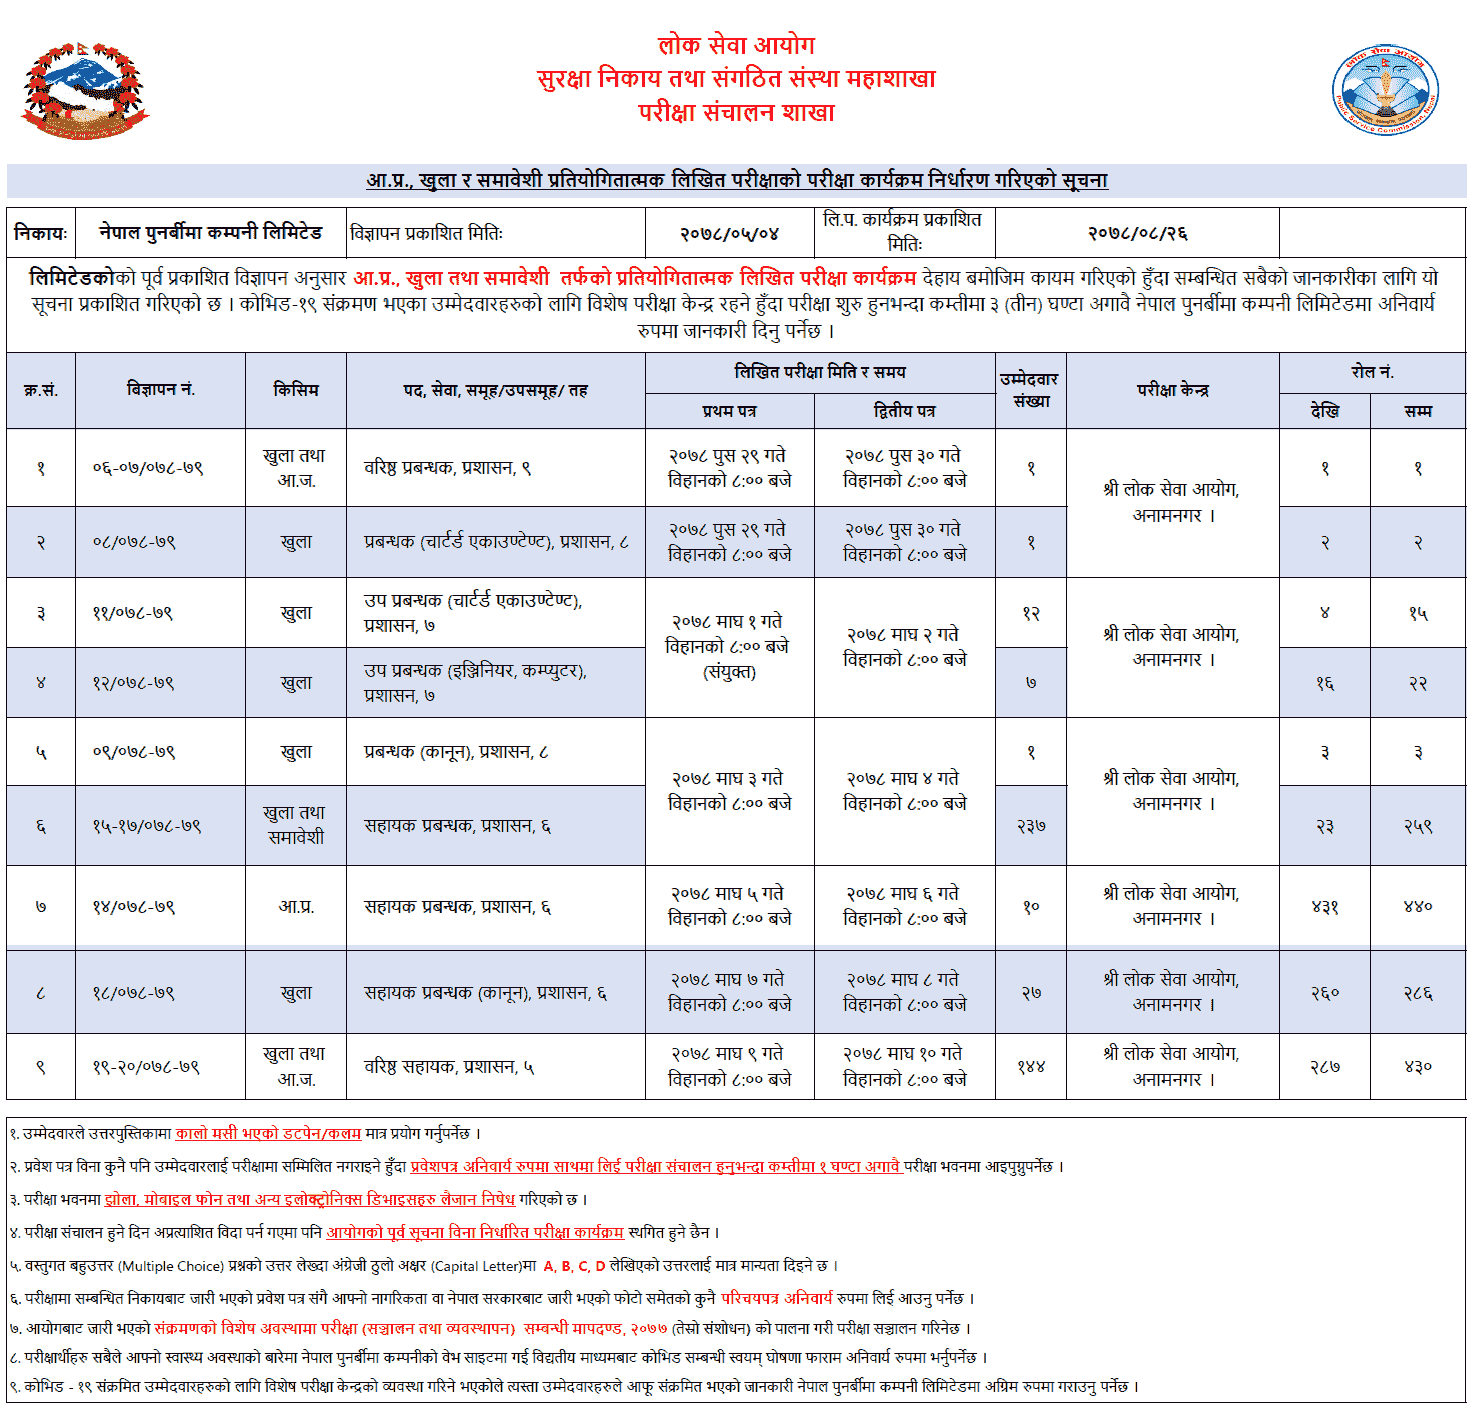 Nepal Reinsurance Company Limited Exam Programs and Exam Center